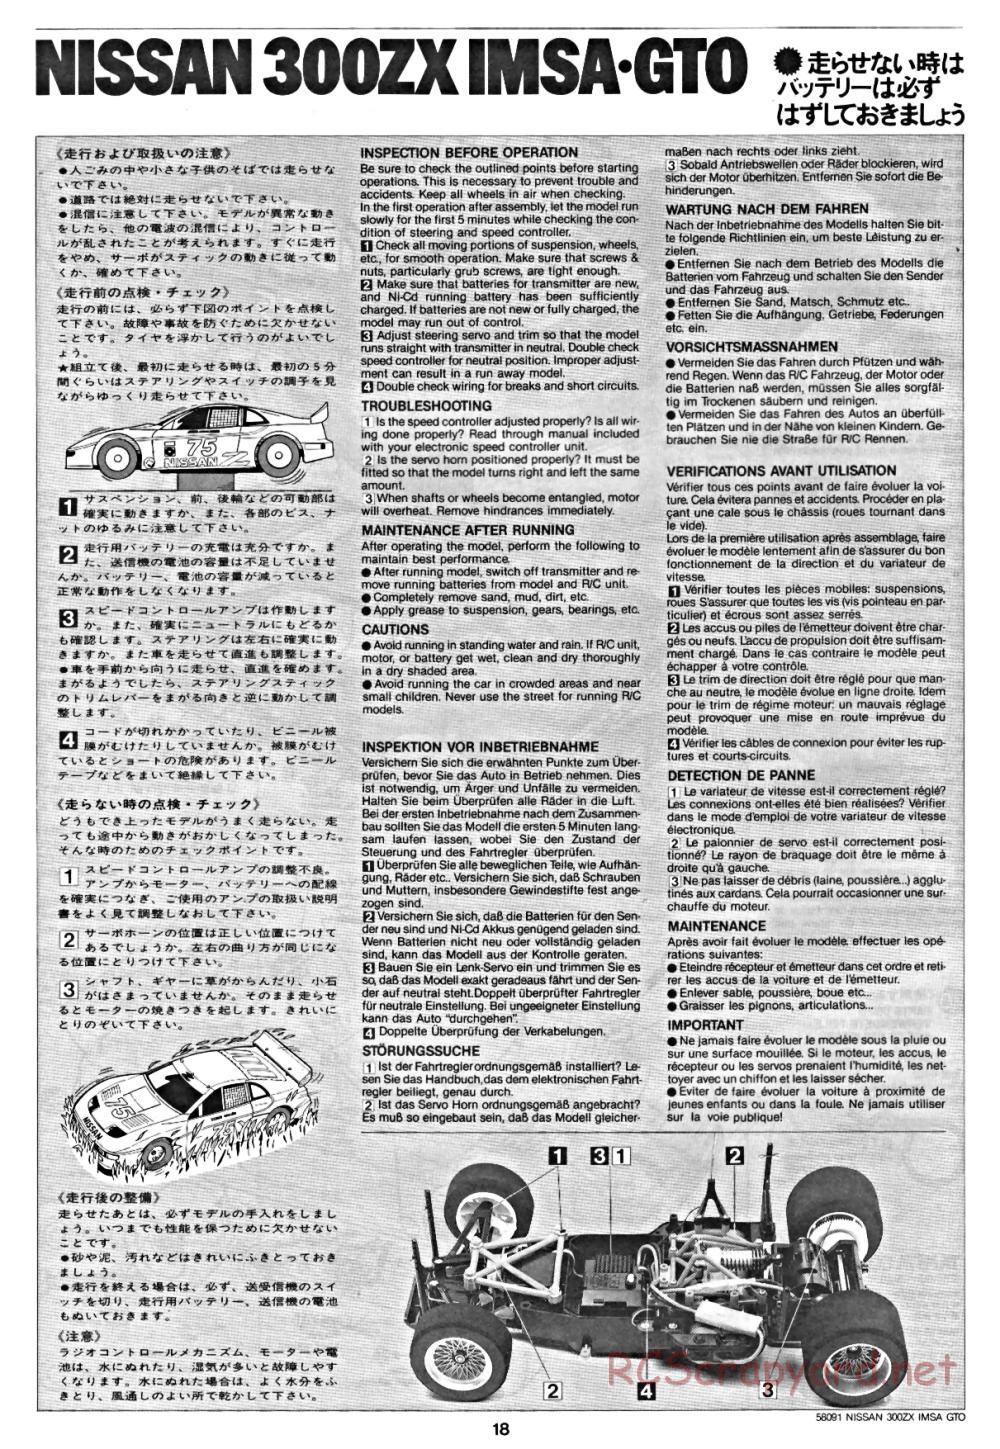 Tamiya - Nissan 300ZX IMSA GTO - 58091 - Manual - Page 18